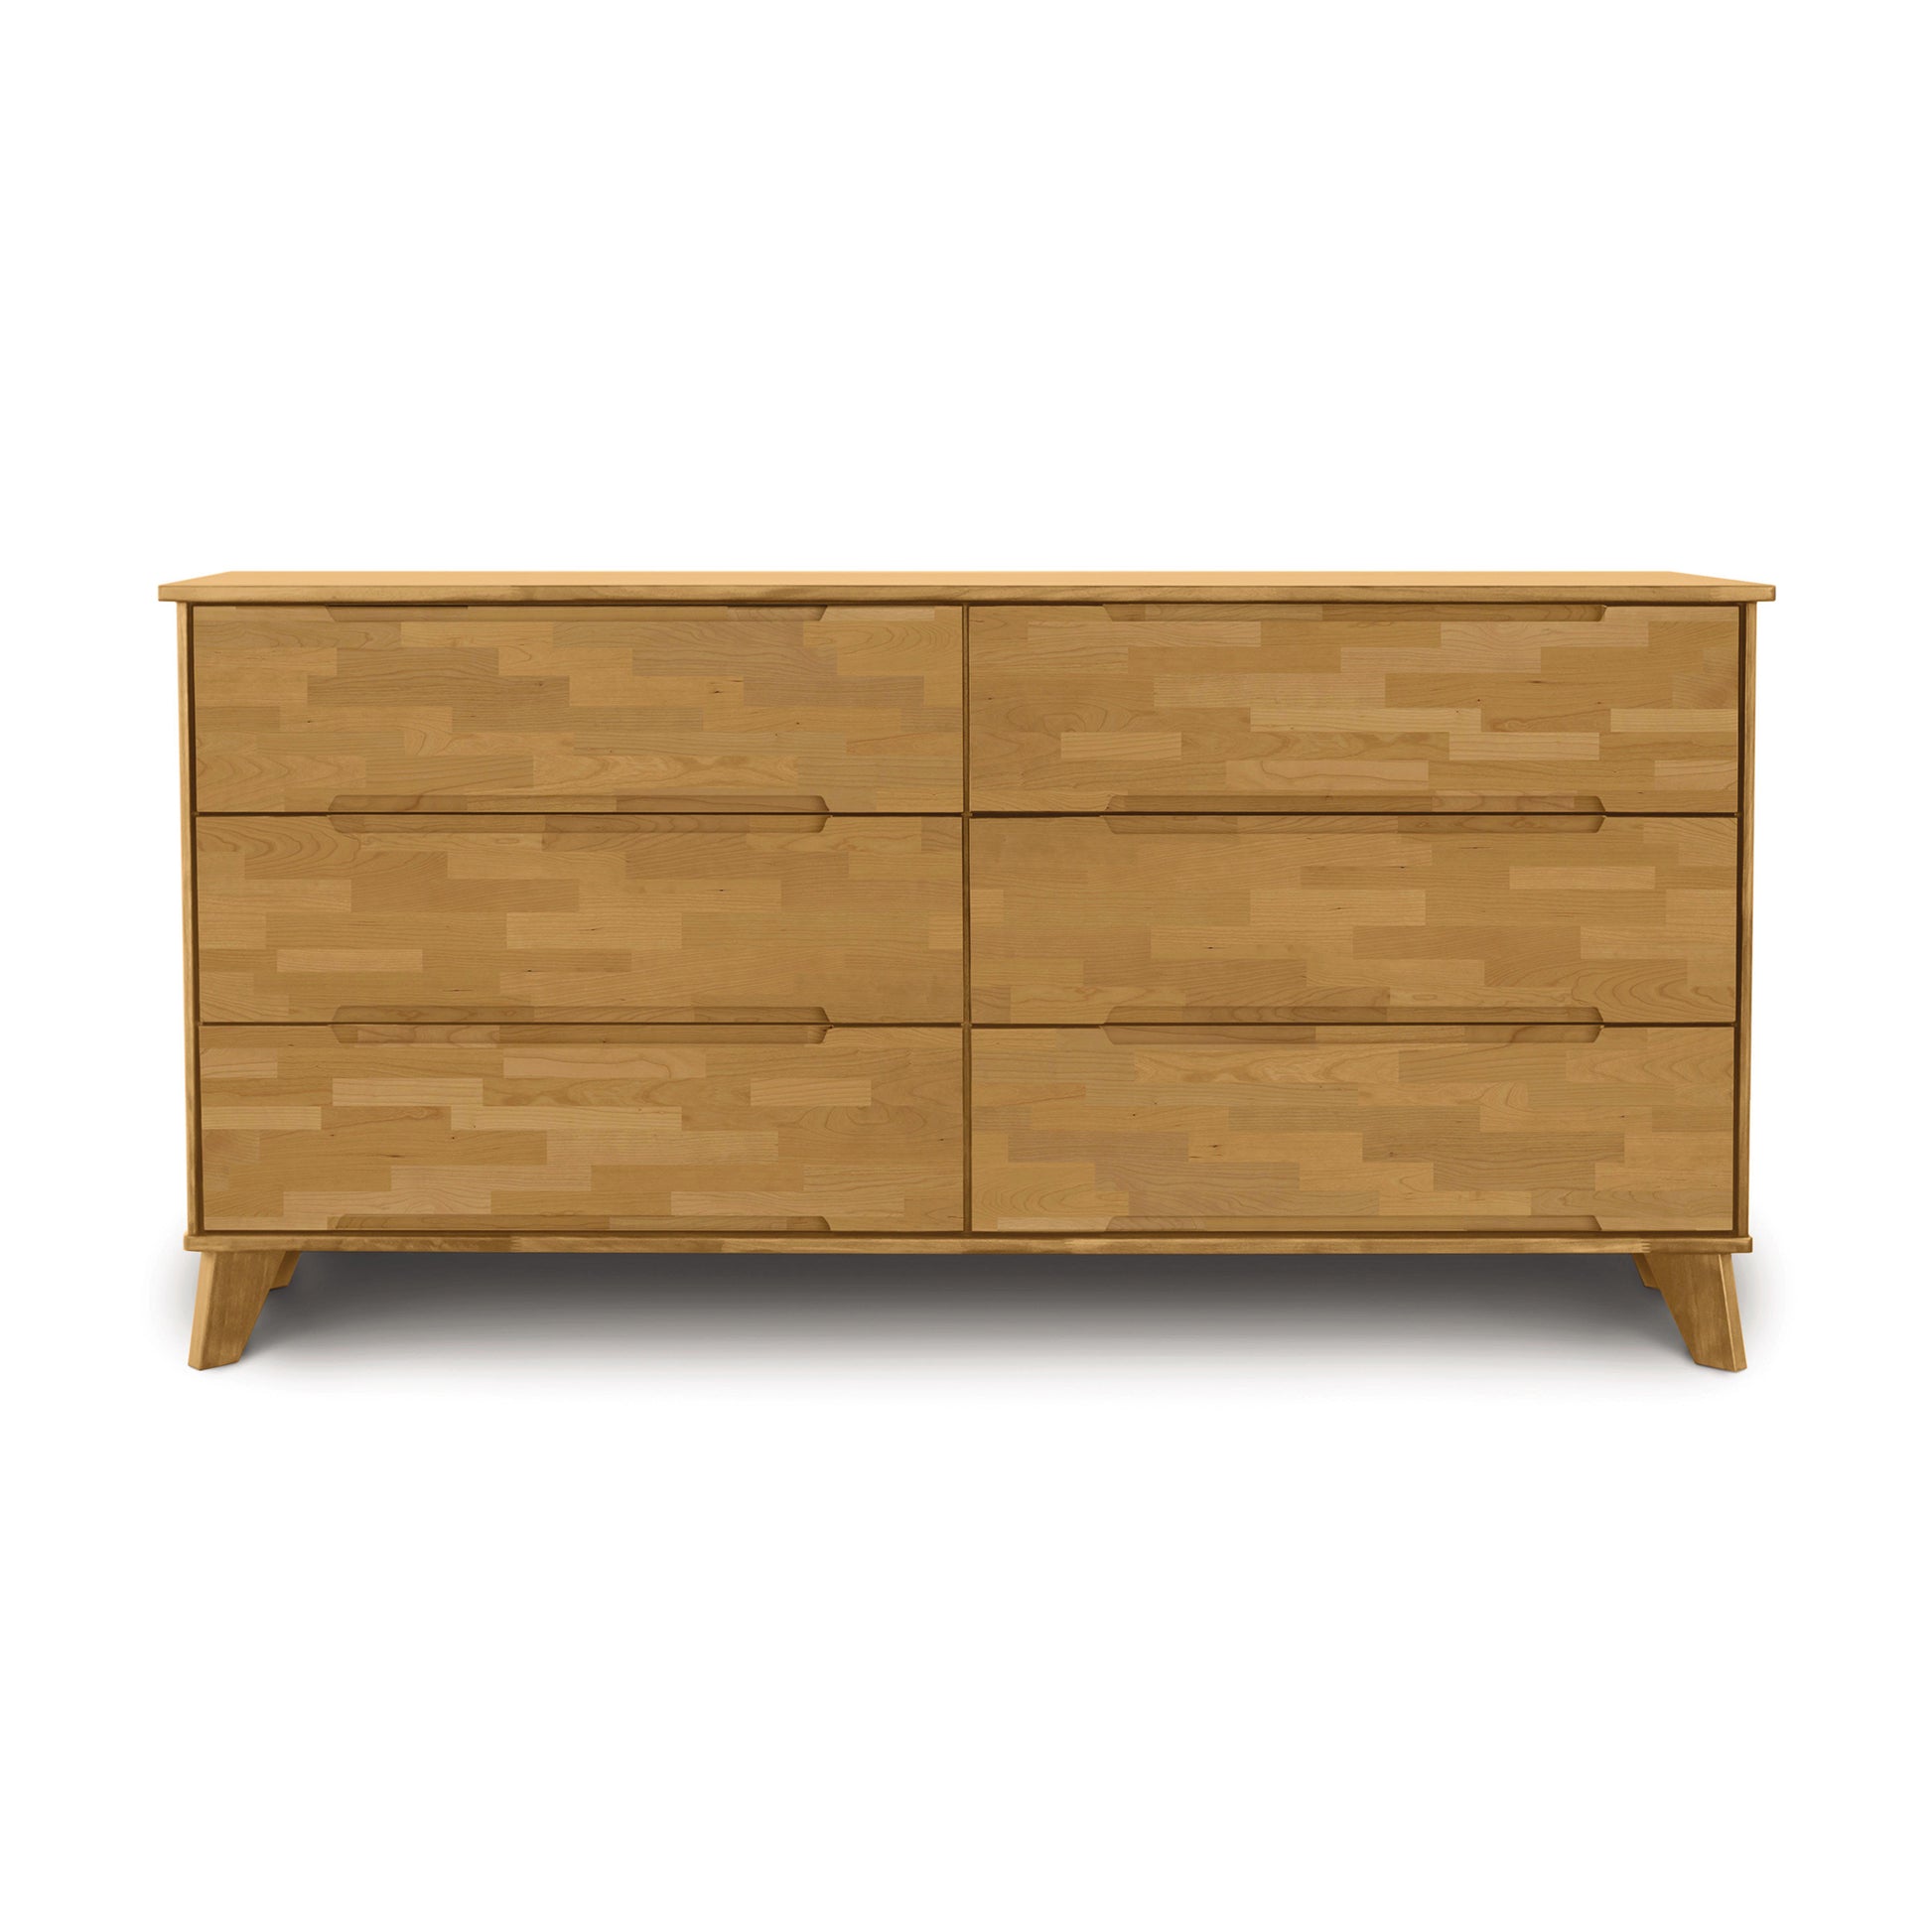 A Copeland Furniture Linn 6-Drawer Dresser on a white background.